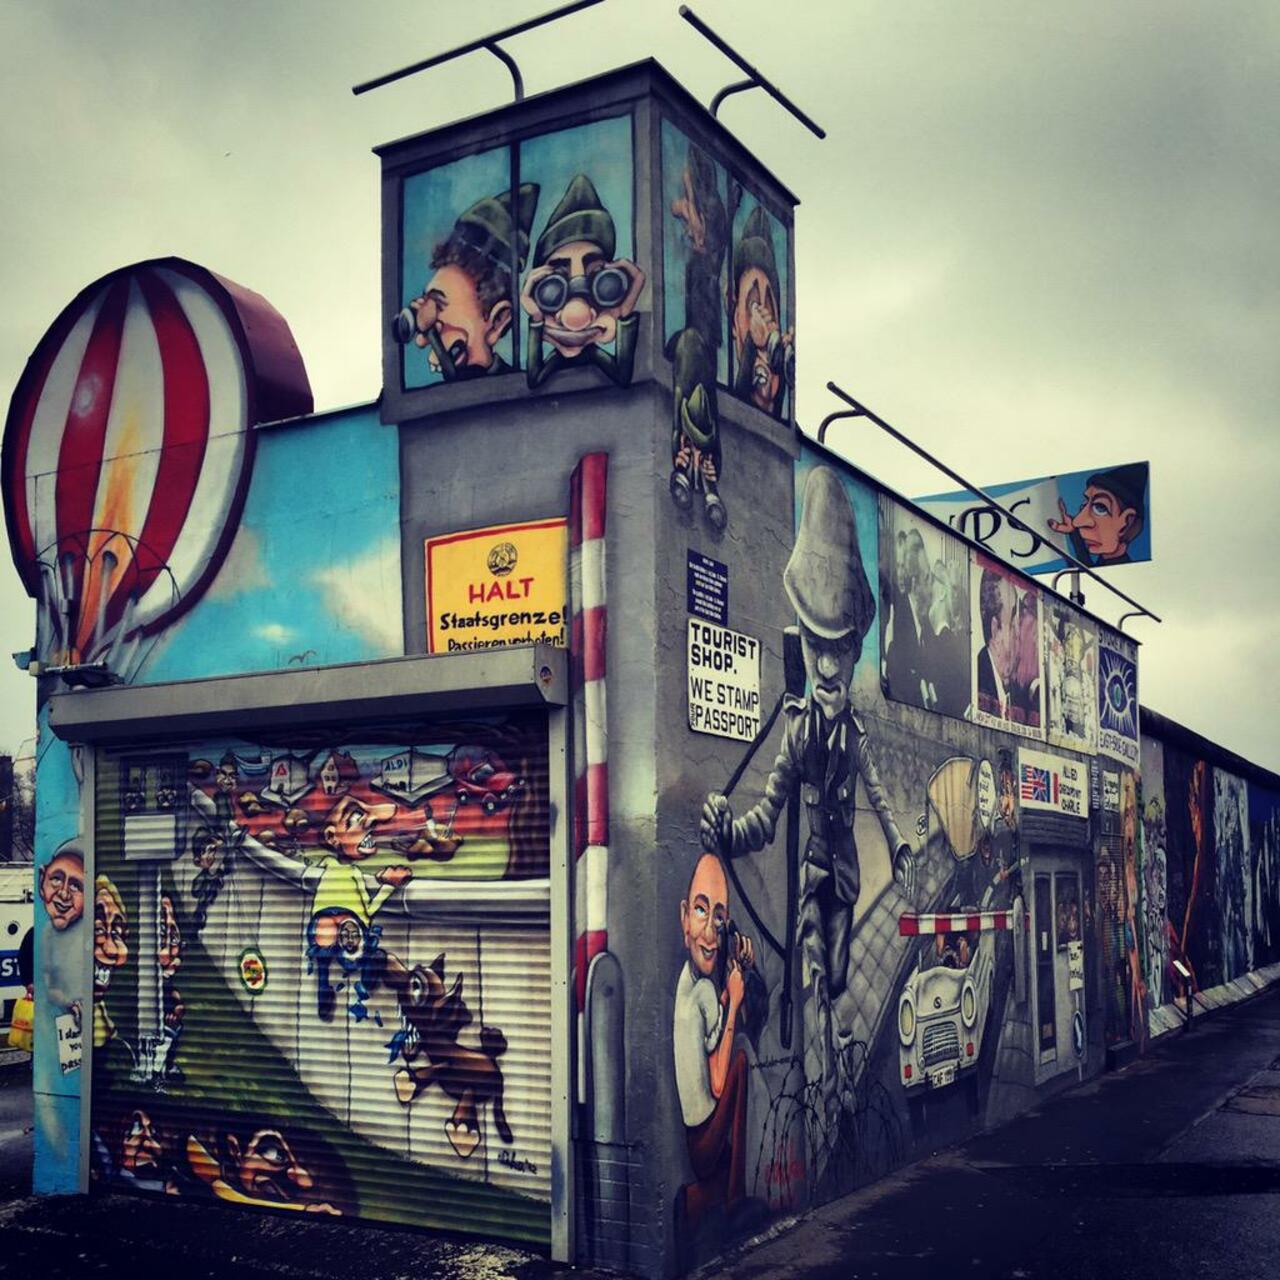 Check point at the wall #art #artwork #berlin #gaman #gamanberlin #tourist #travel #onmyway #graffiti #grafiti http://t.co/tkMslwceEO